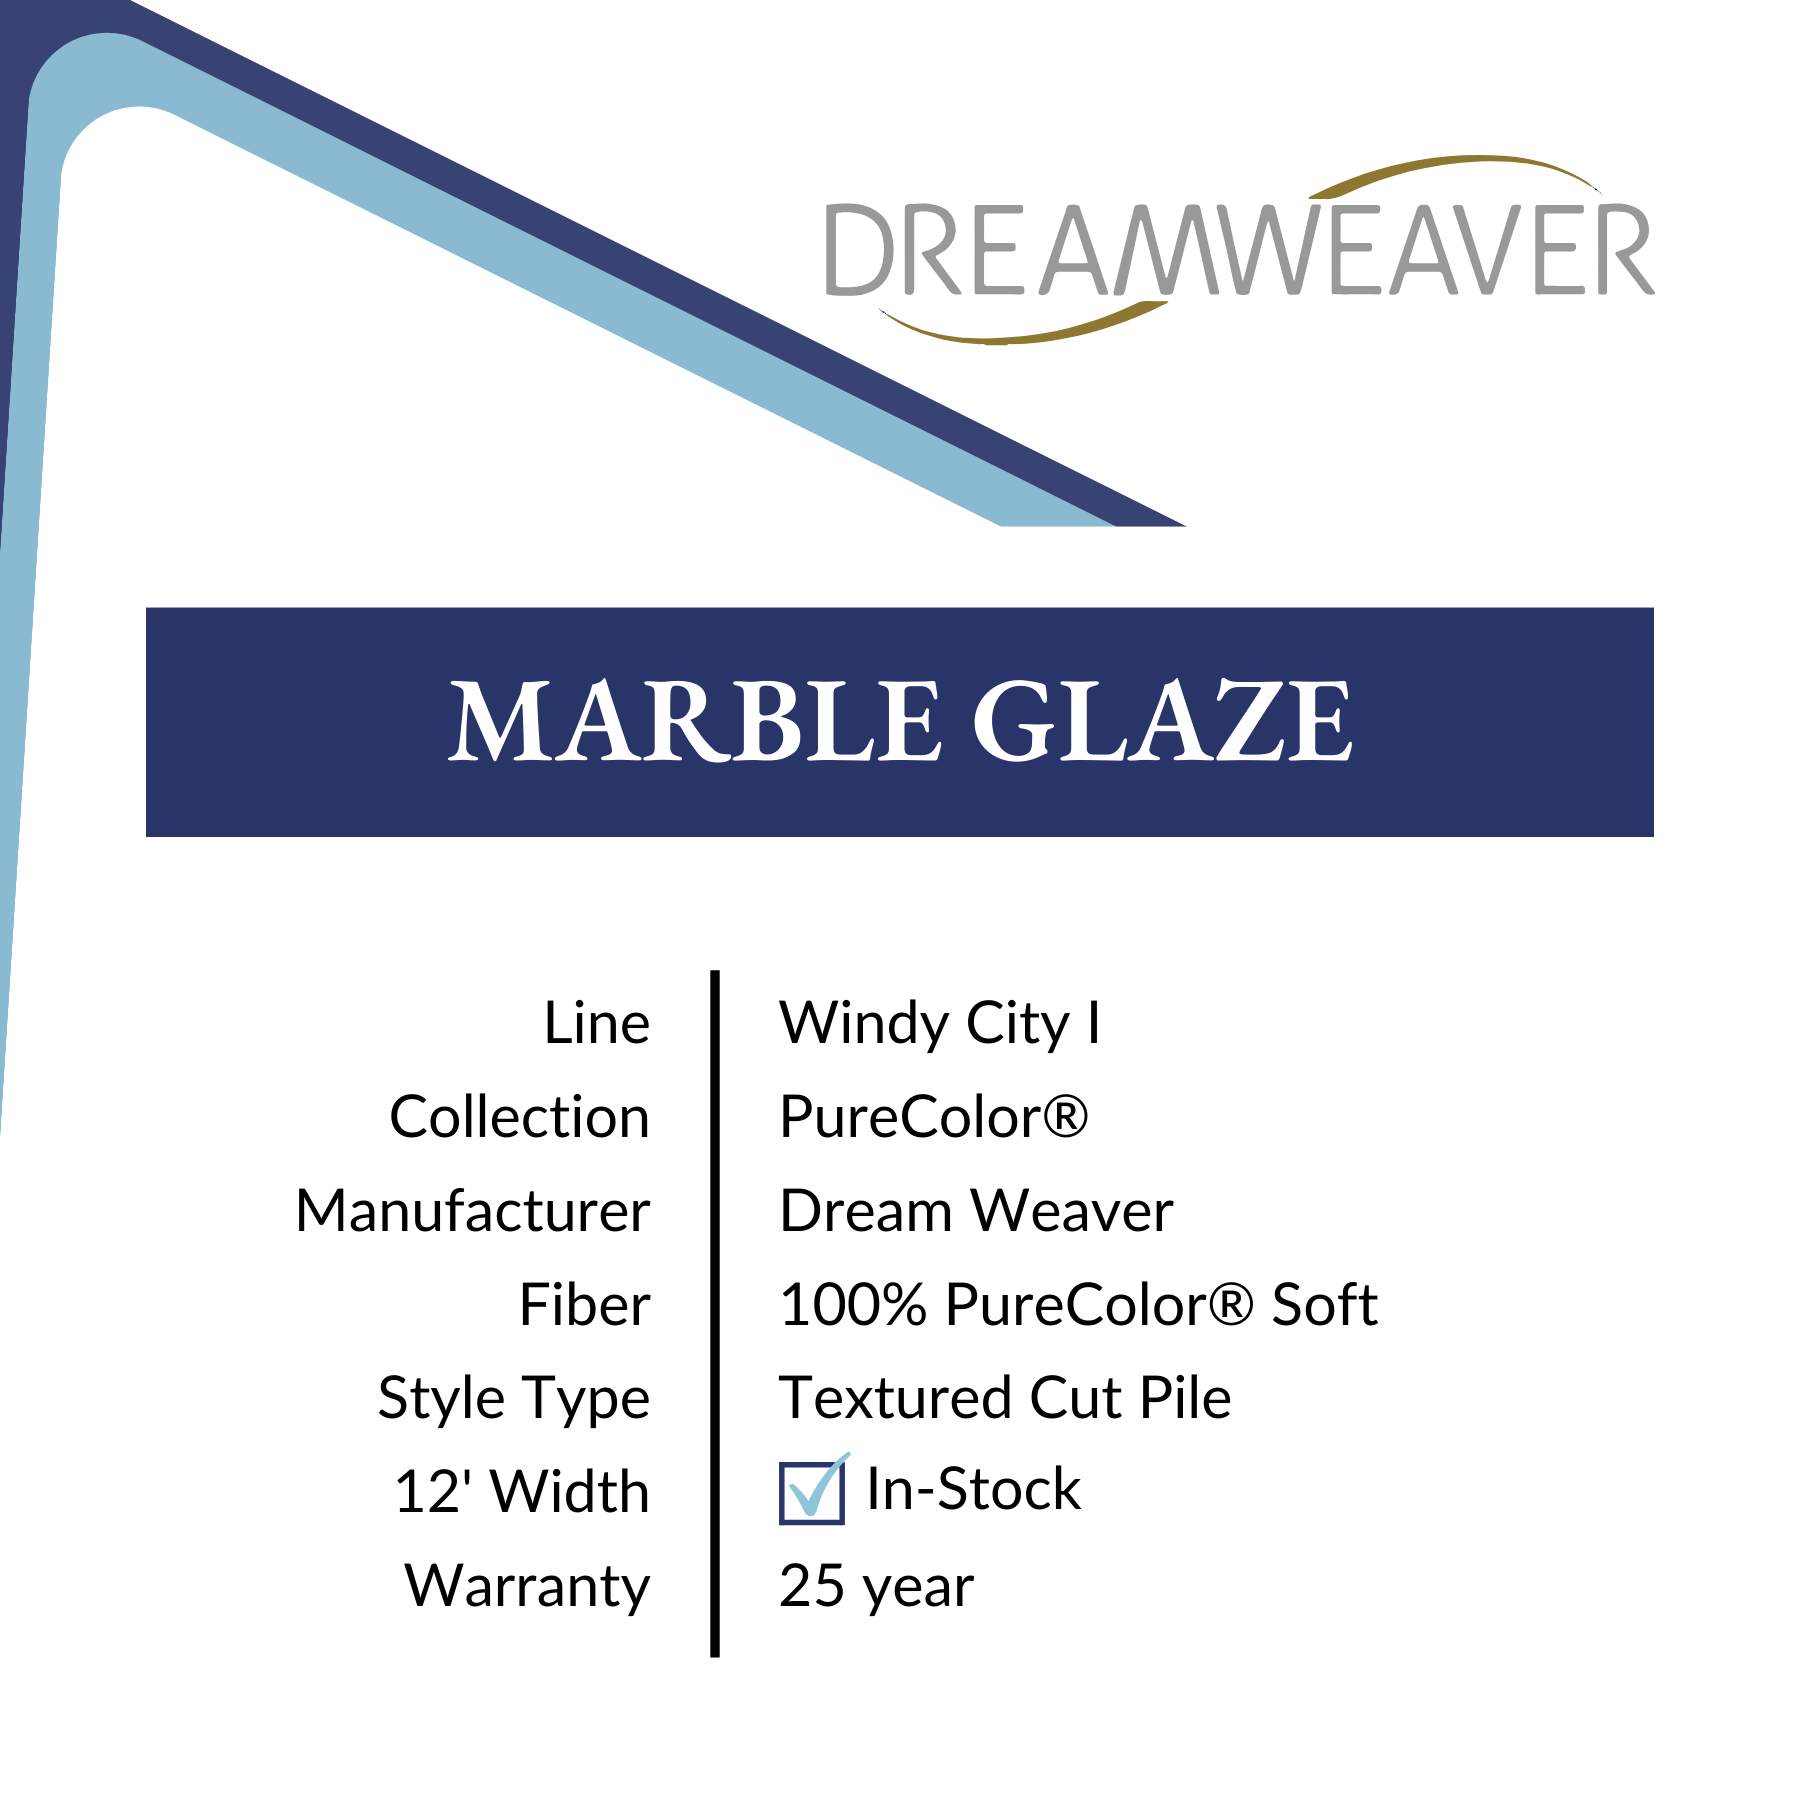 Marble Glaze, Windy City I, Carpet by Dreamweaver, Calhoun's Flooring Springfield, IL Specs